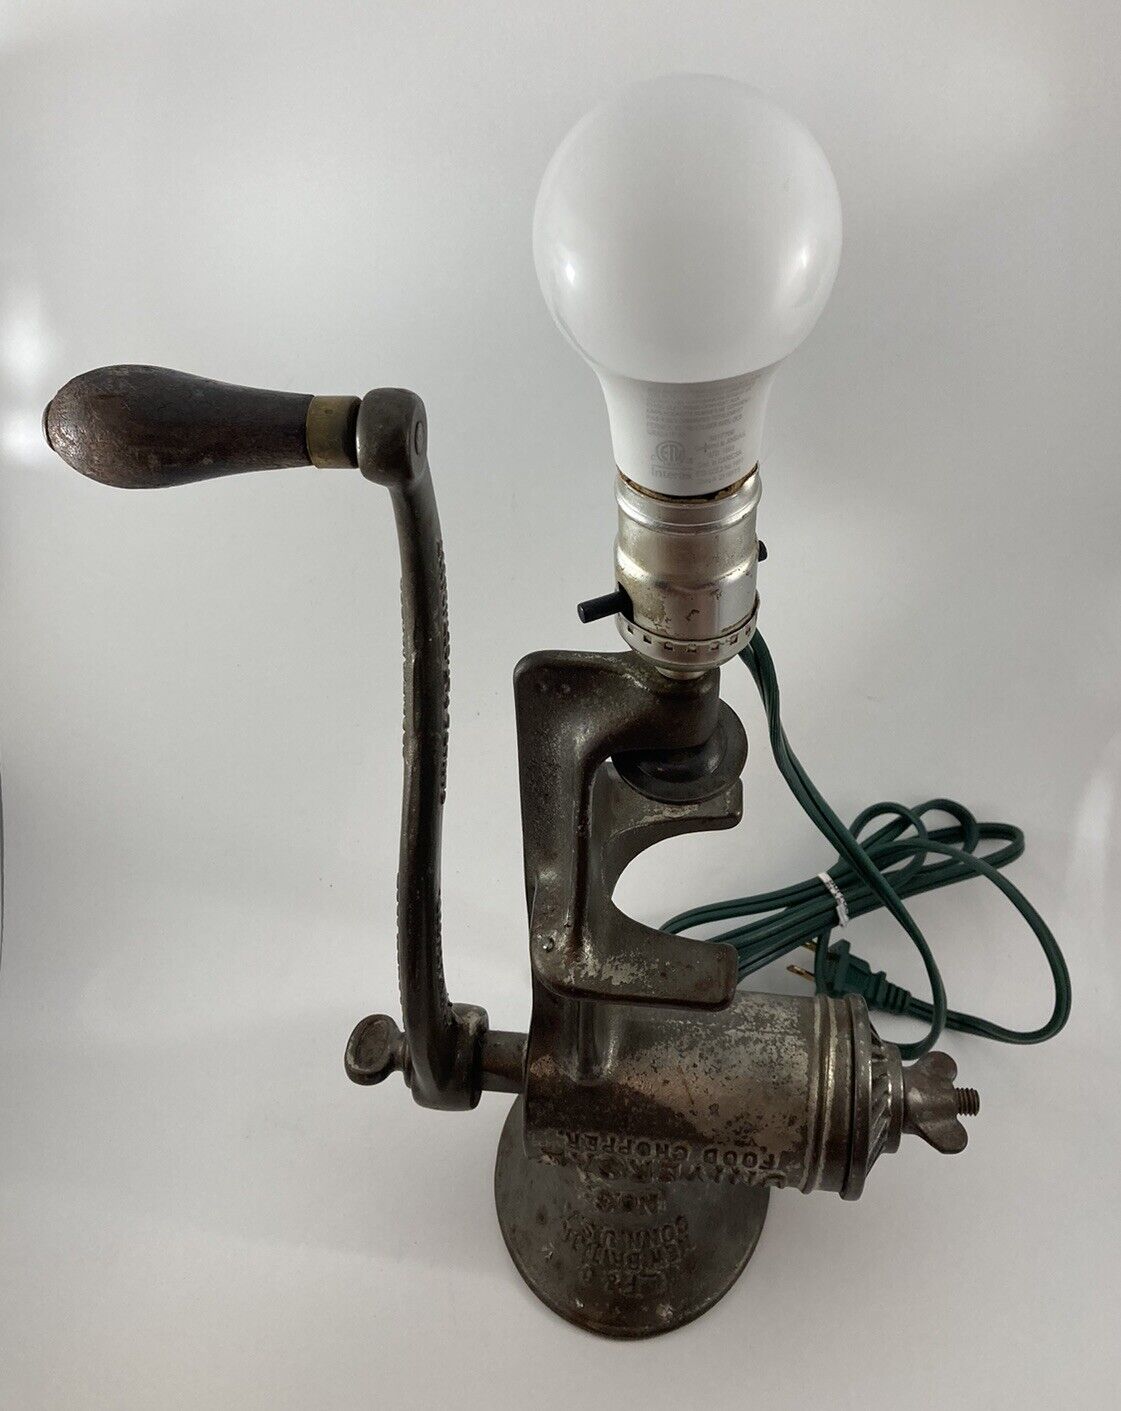 1890’s Antique Meat Grinder Table Lamp Vintage Industrial Decor Steampunk Works